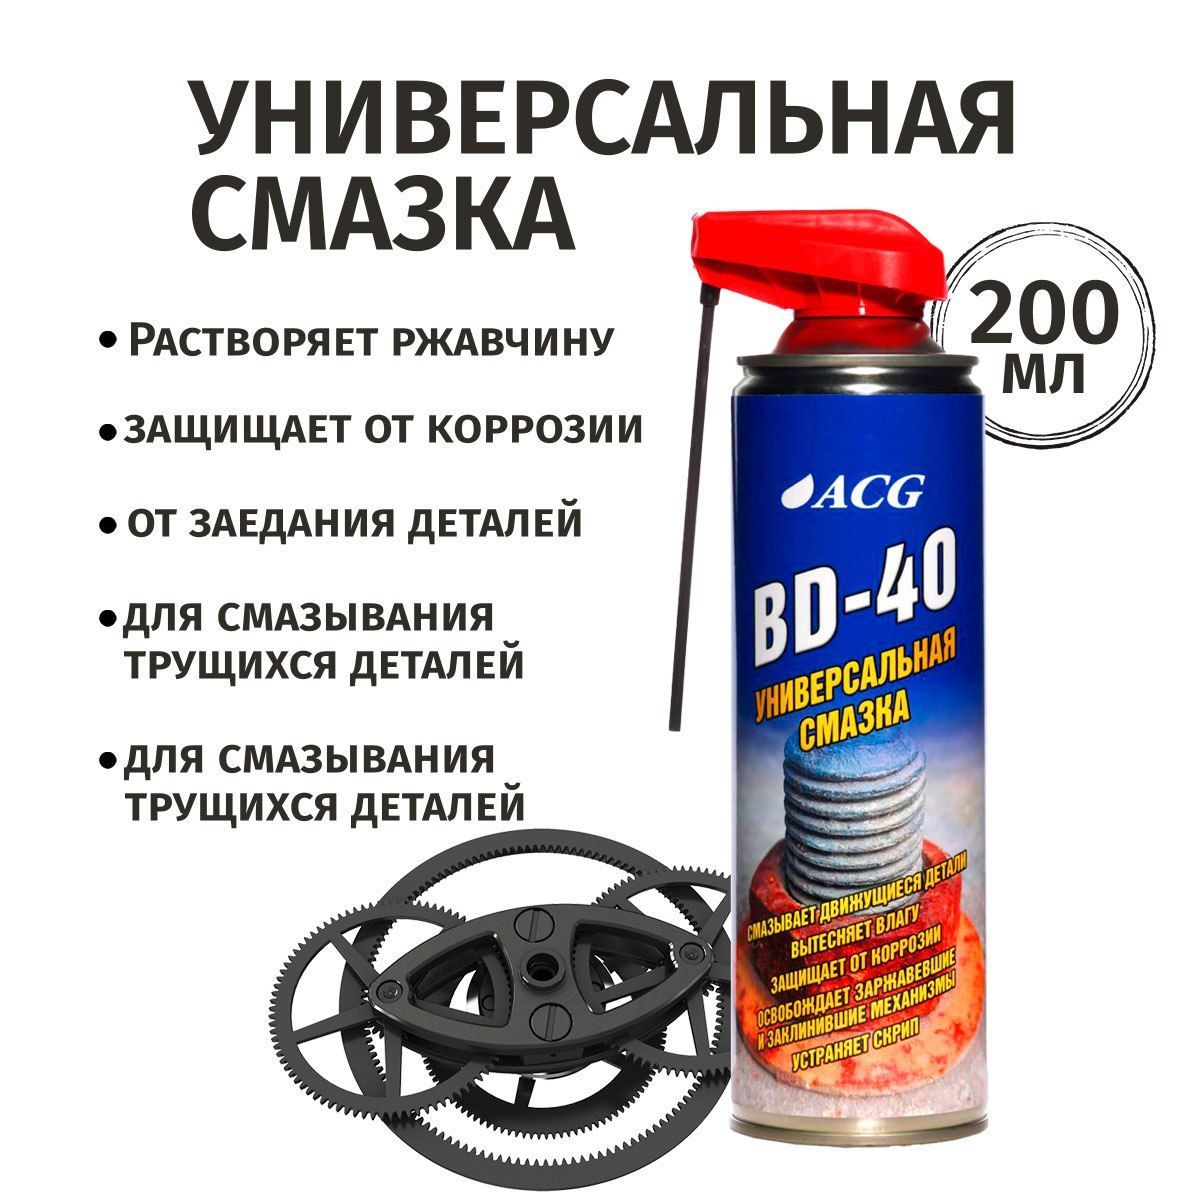 Acg автохимия. Смазка WR-40. Rd-40 смазка. Смазка ВД-40 сертификат. LK 40 смазка.